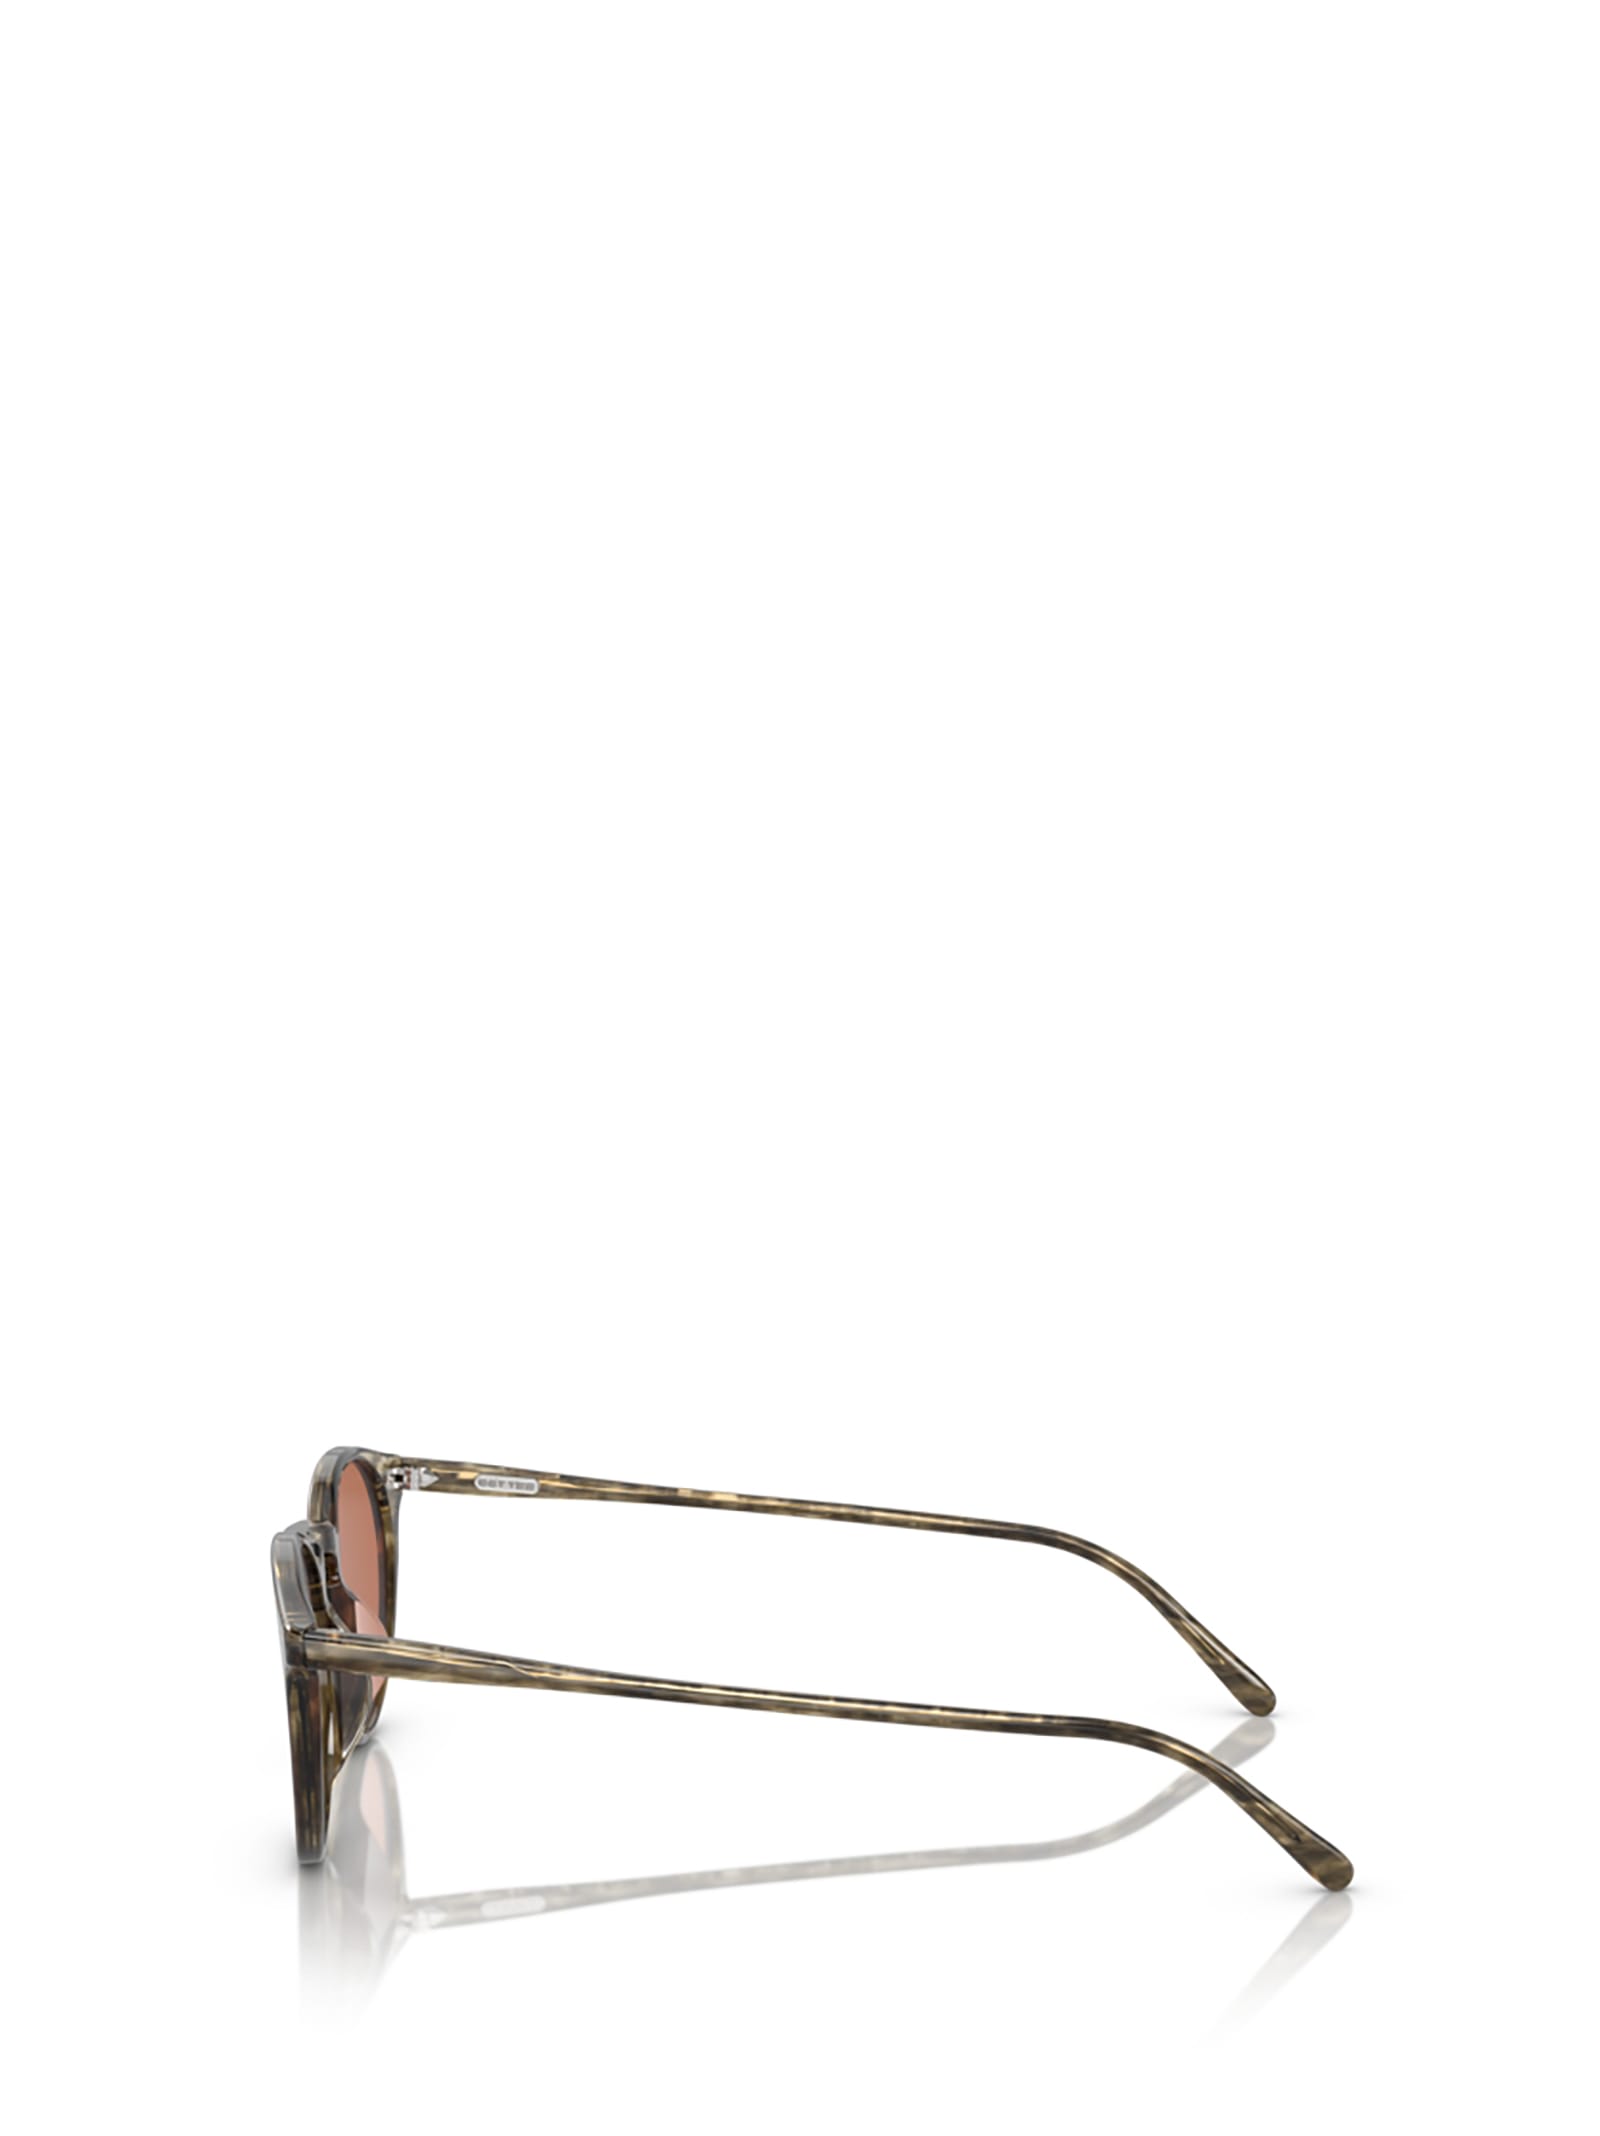 Shop Oliver Peoples Ov5529su Soft Olive Bark Sunglasses